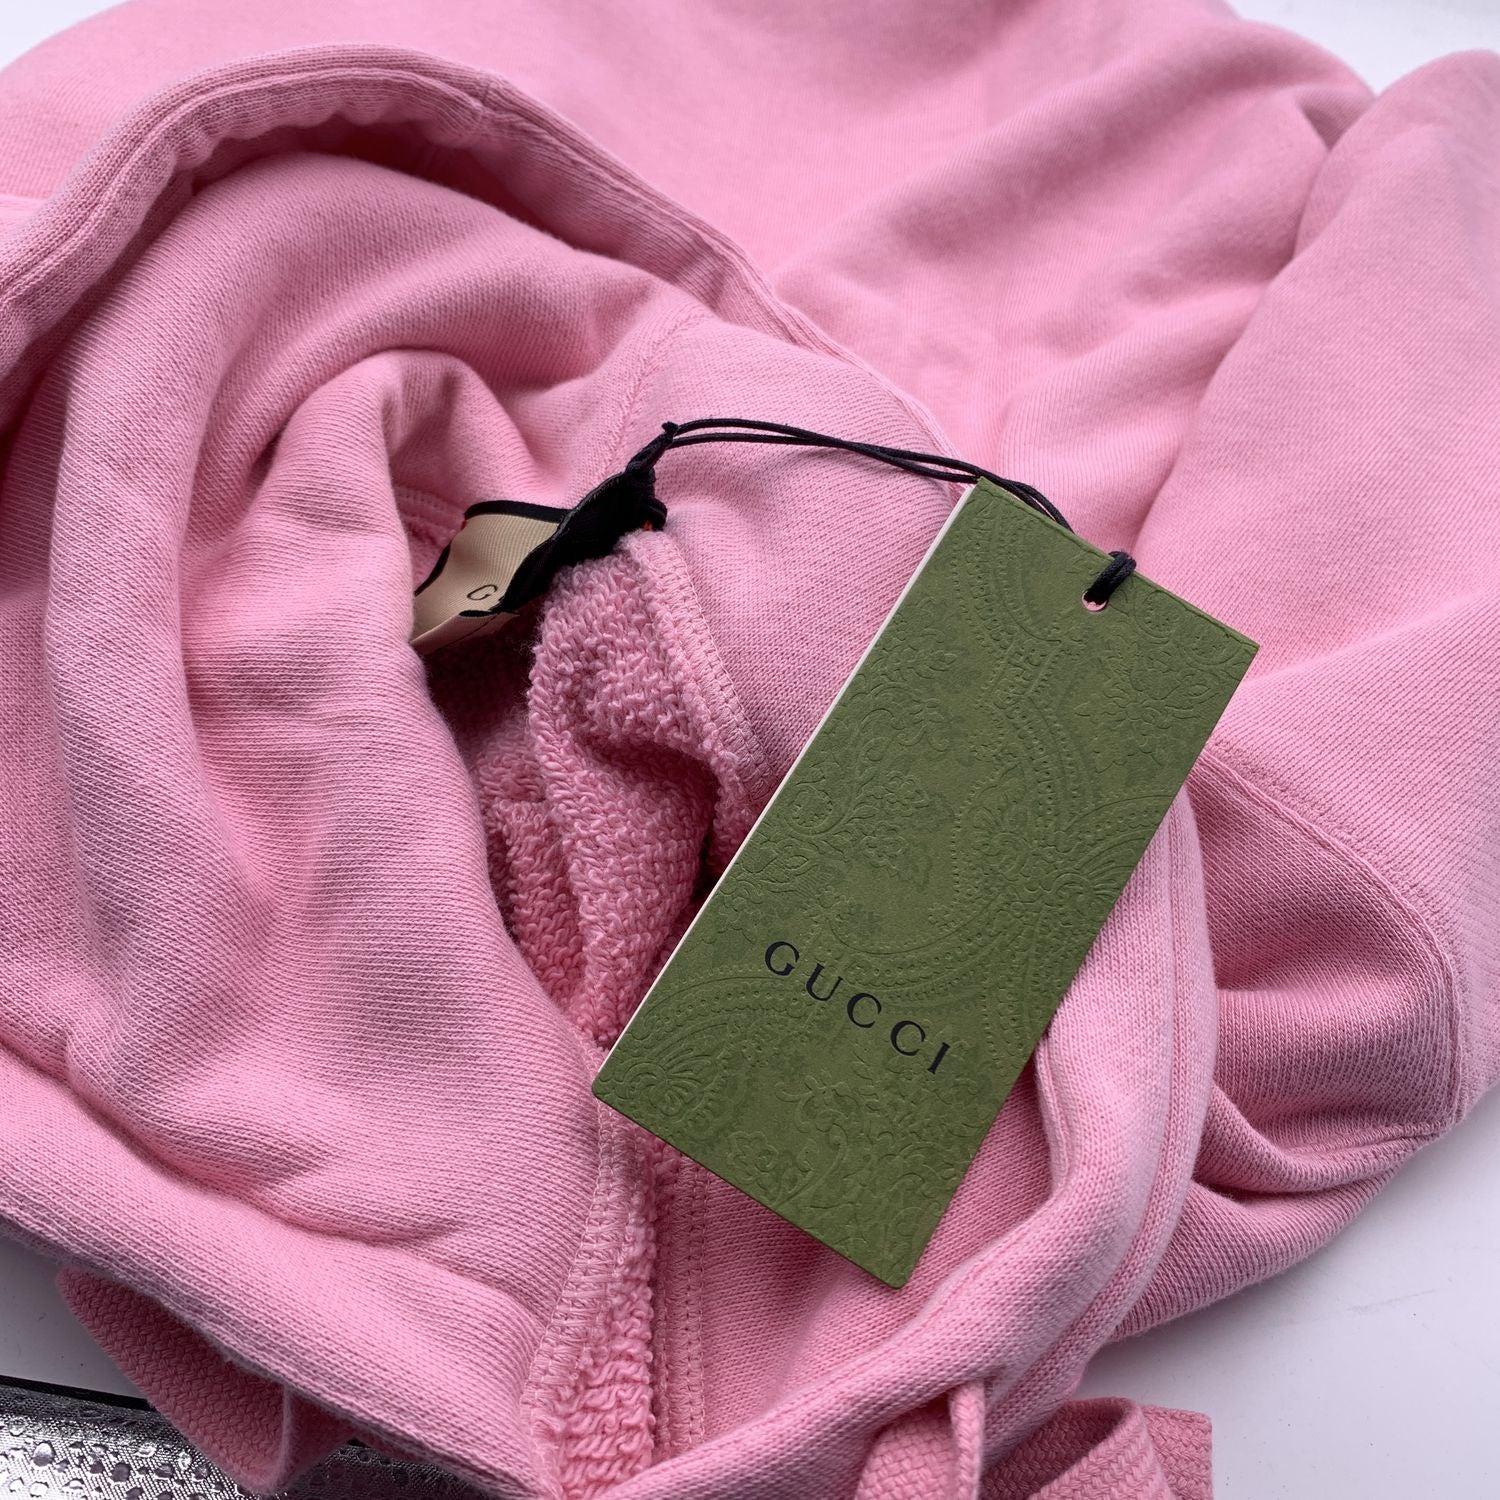 Gucci Pink Cherry Motif Cotton Hoodie Sweatshirt Size M 1